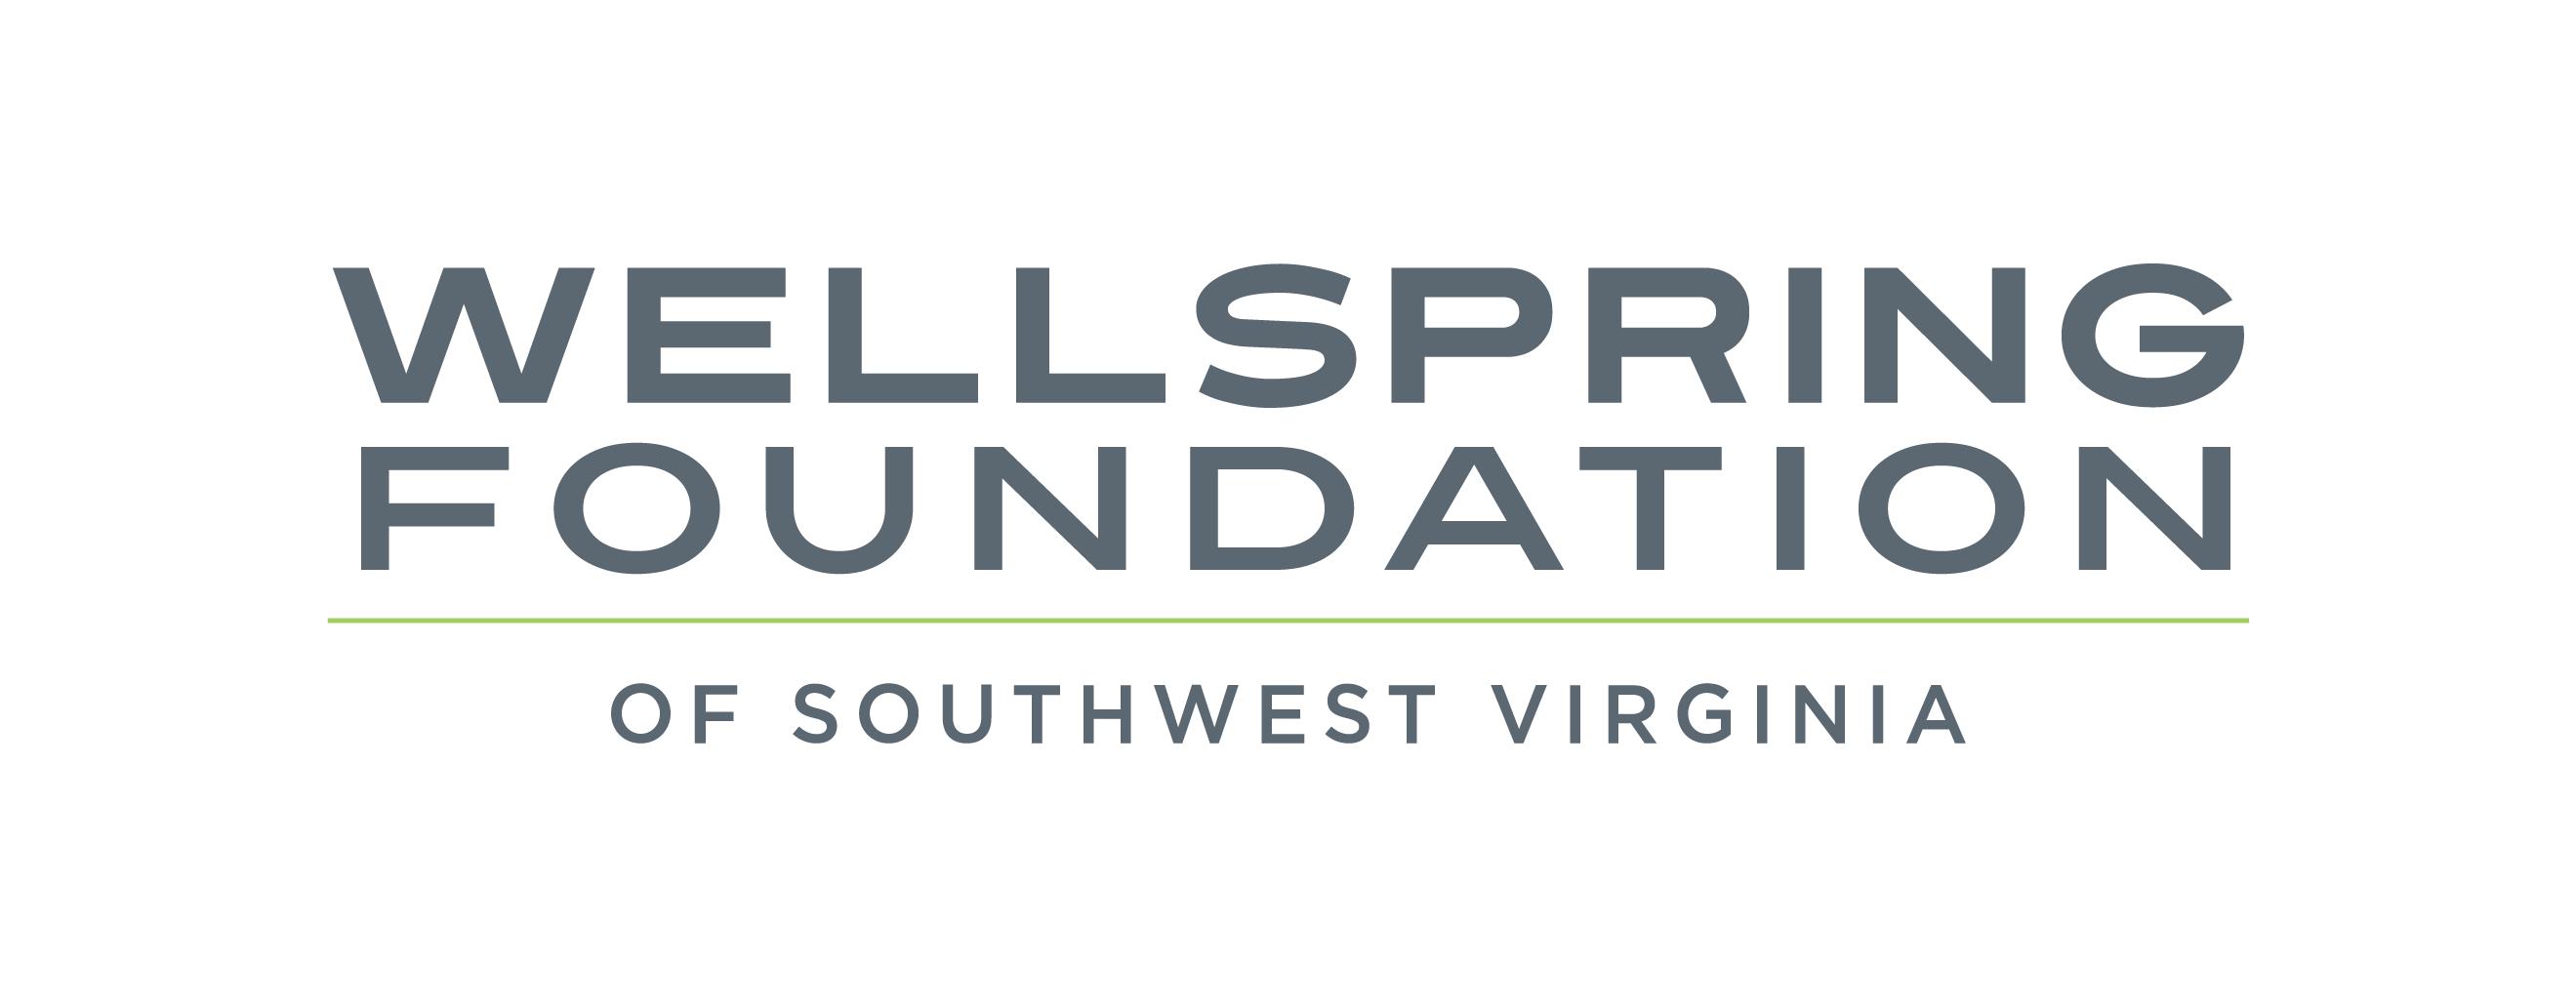 Wellspring Foundation Logo